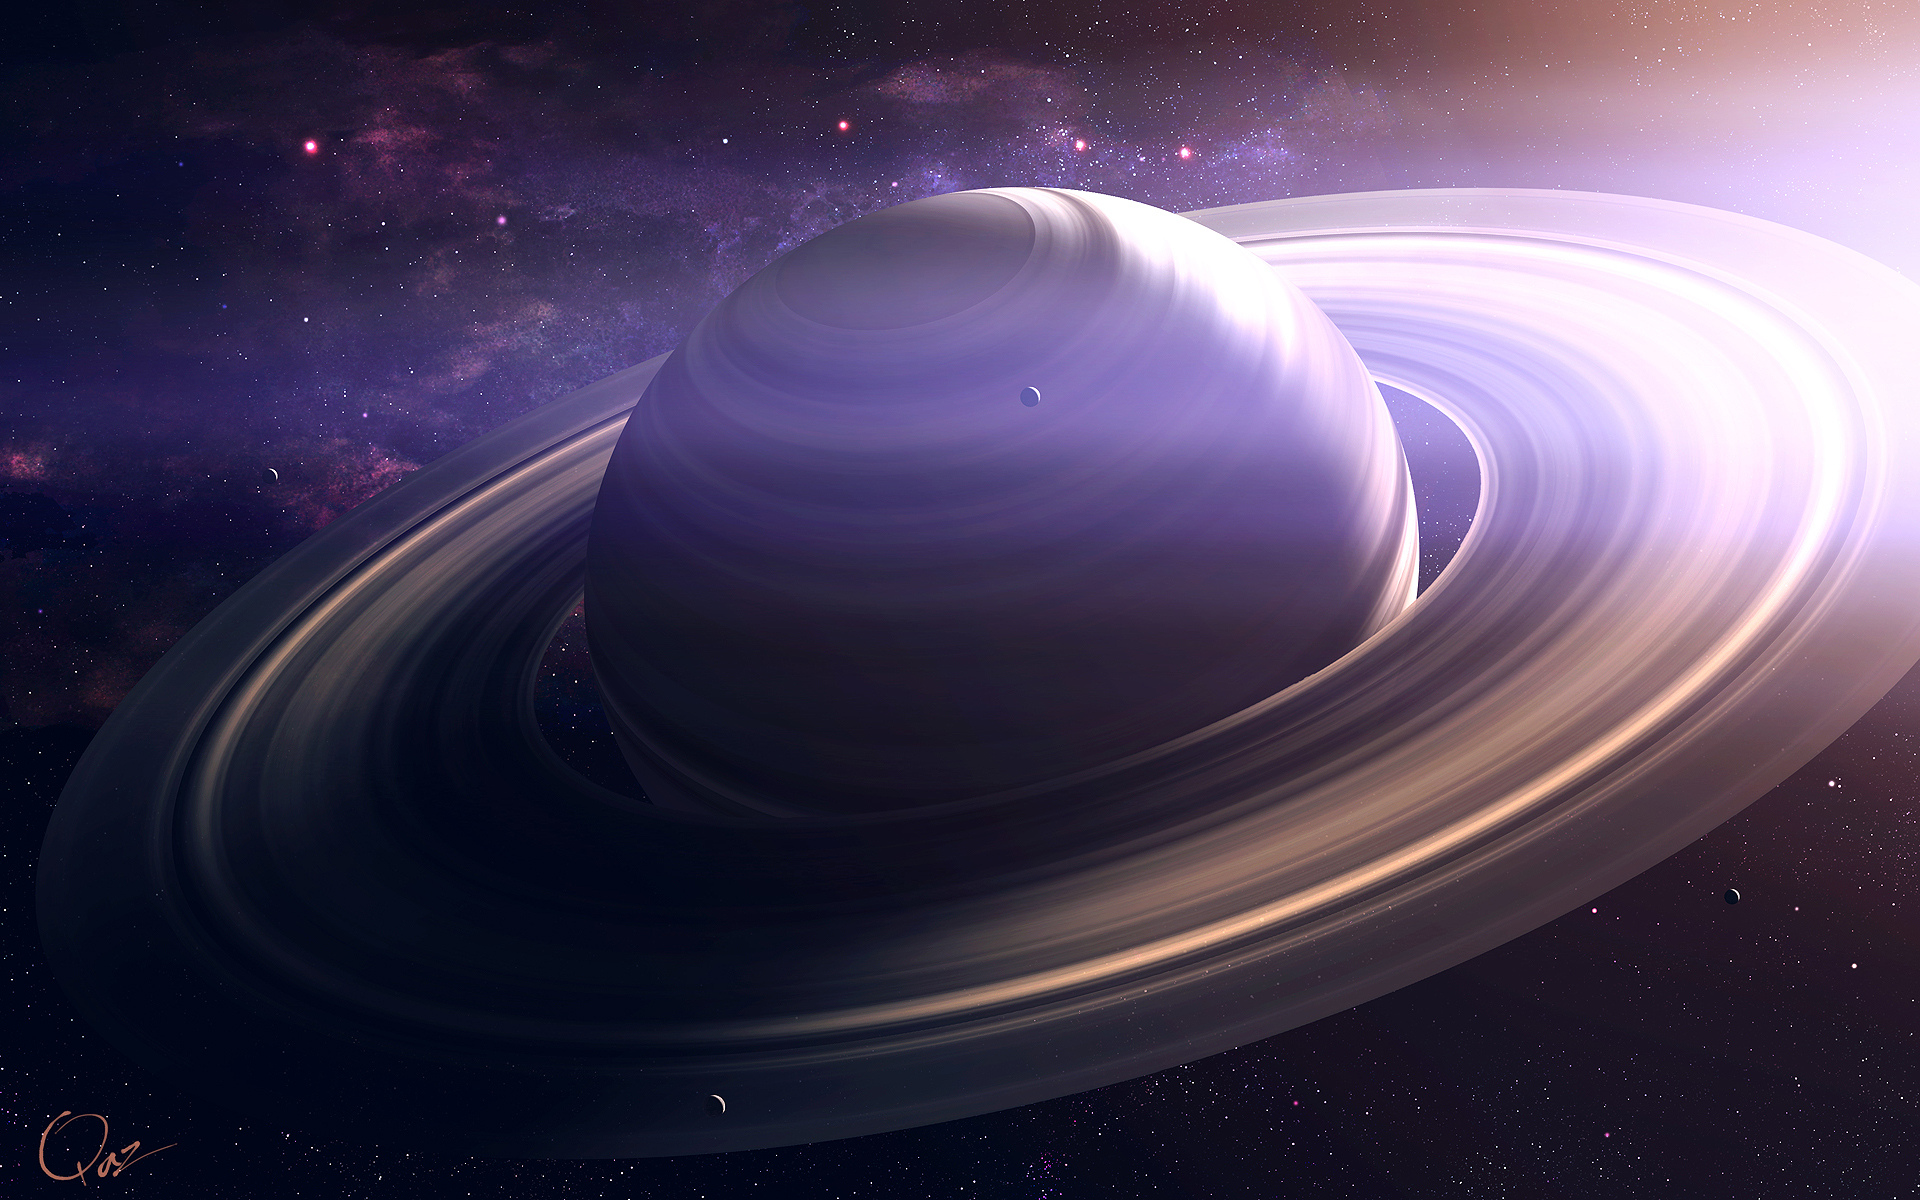 Сатурн земная группа. Сатурн (Планета). Планета Сатурн Кассини кольца. Планета Нептун газовый гигант. Сатурн (Планета) планеты-гиганты.